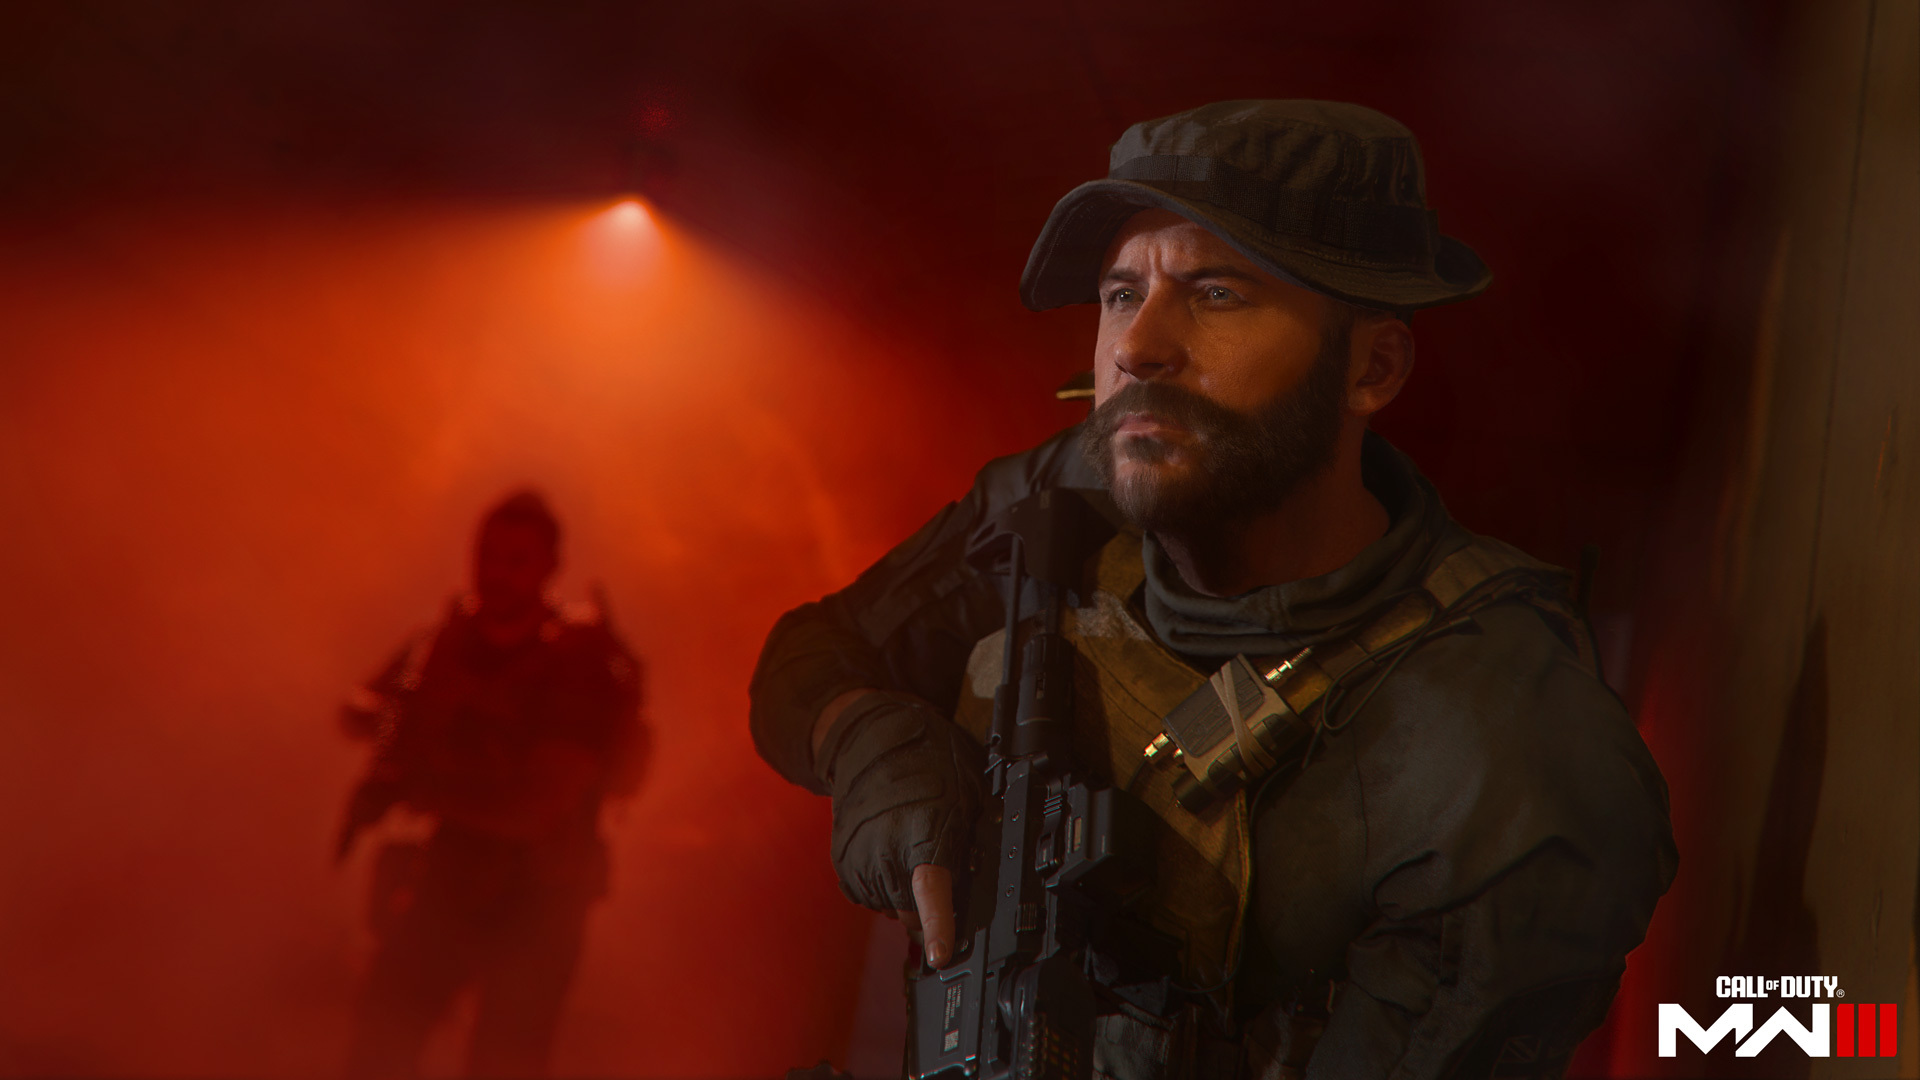 The War Has Changed - Call of Duty: Modern Warfare III